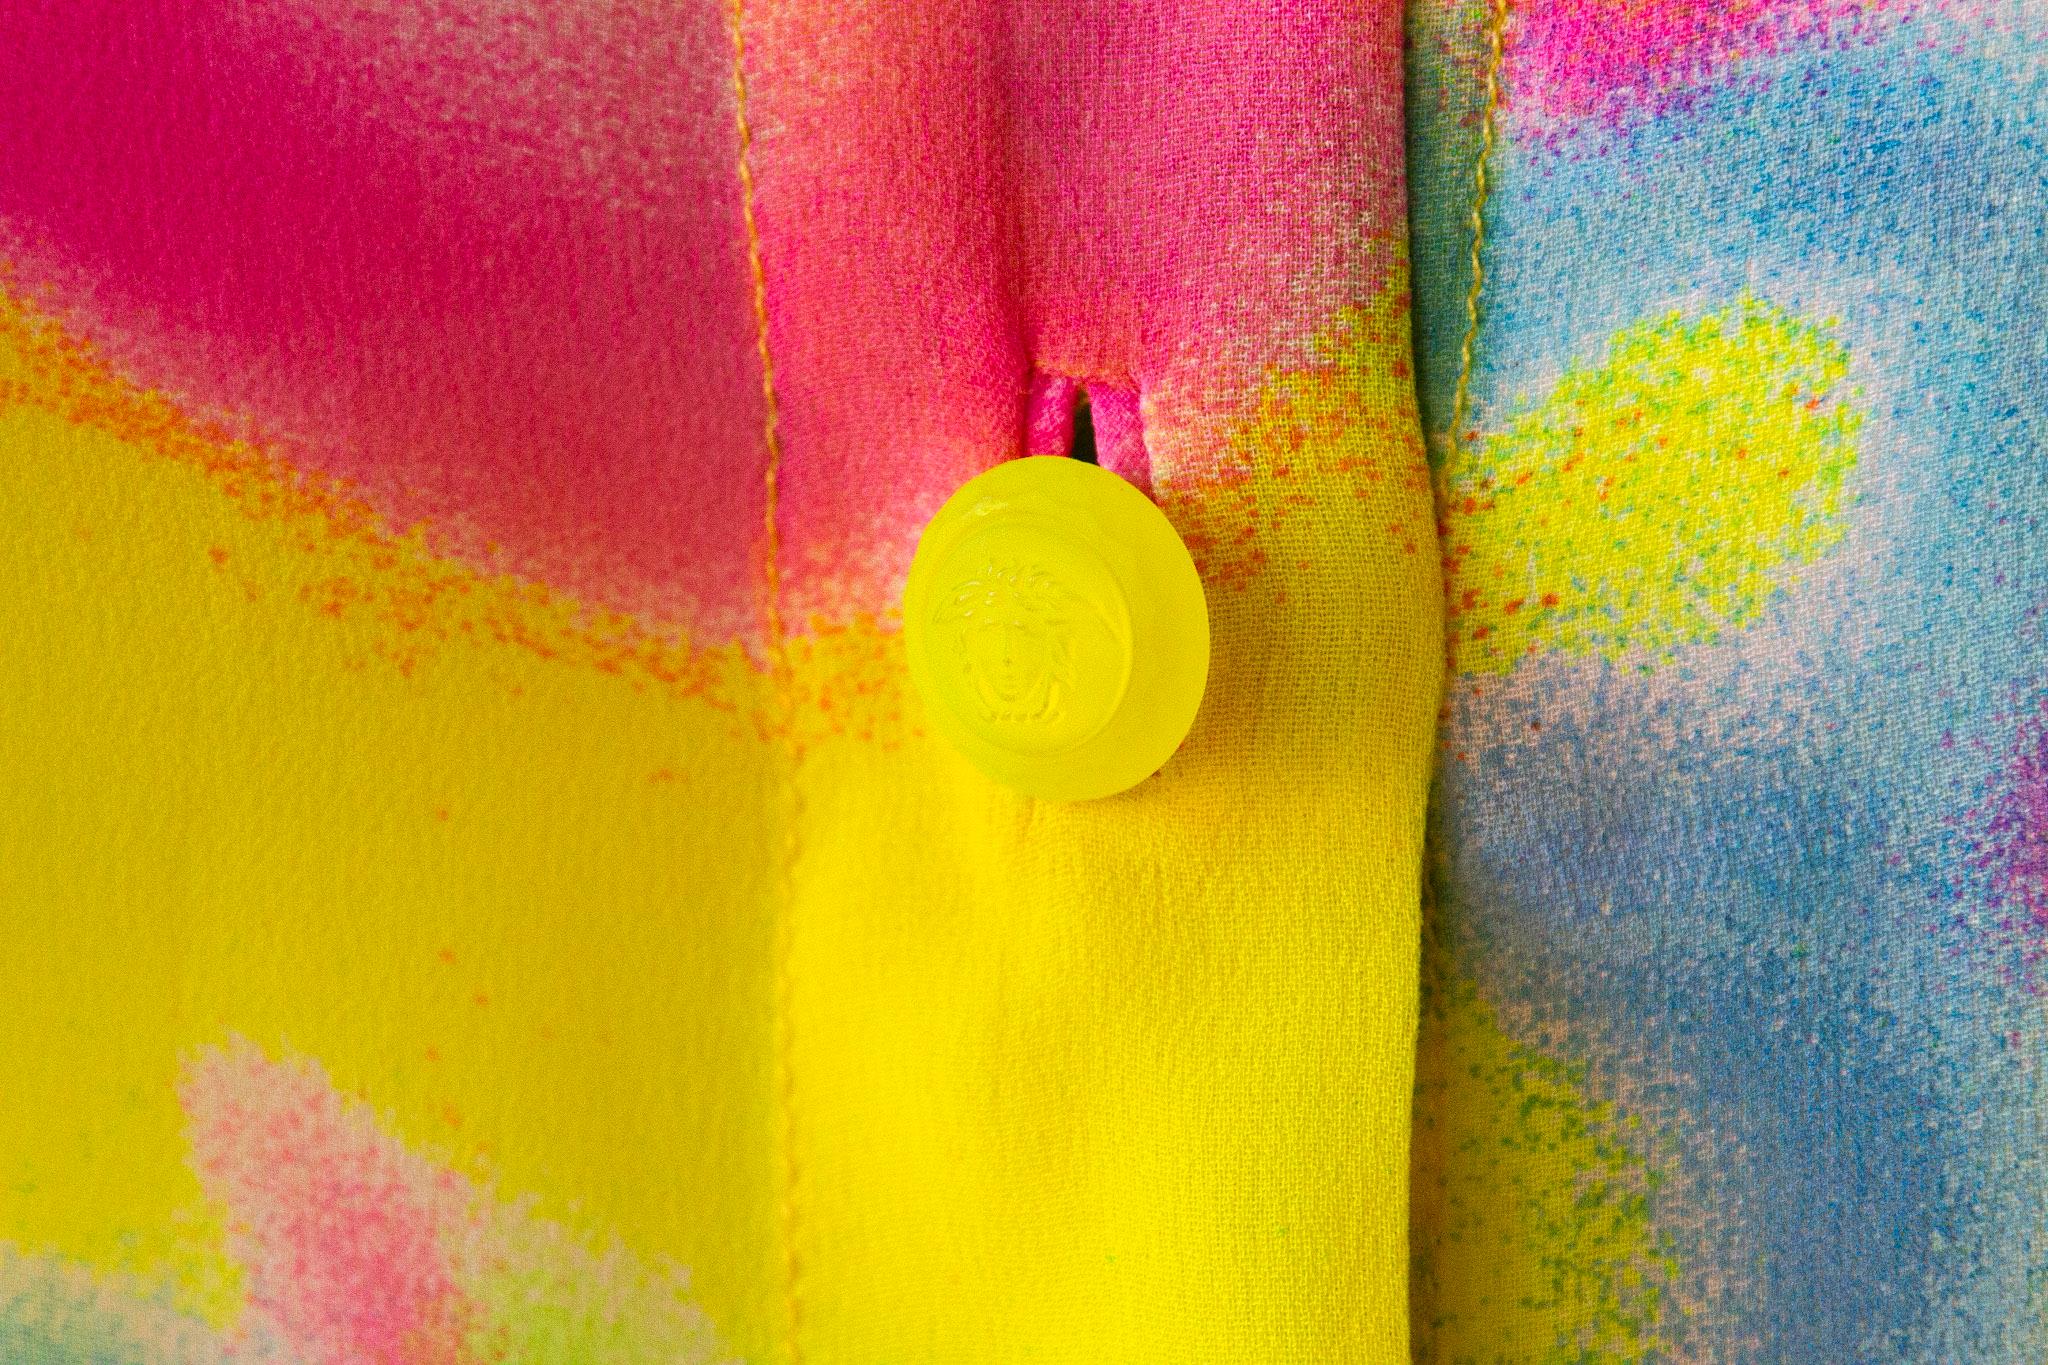 Women's or Men's Versace S/S 1996 Neon Yellow Spray Paint Ensemble For Sale